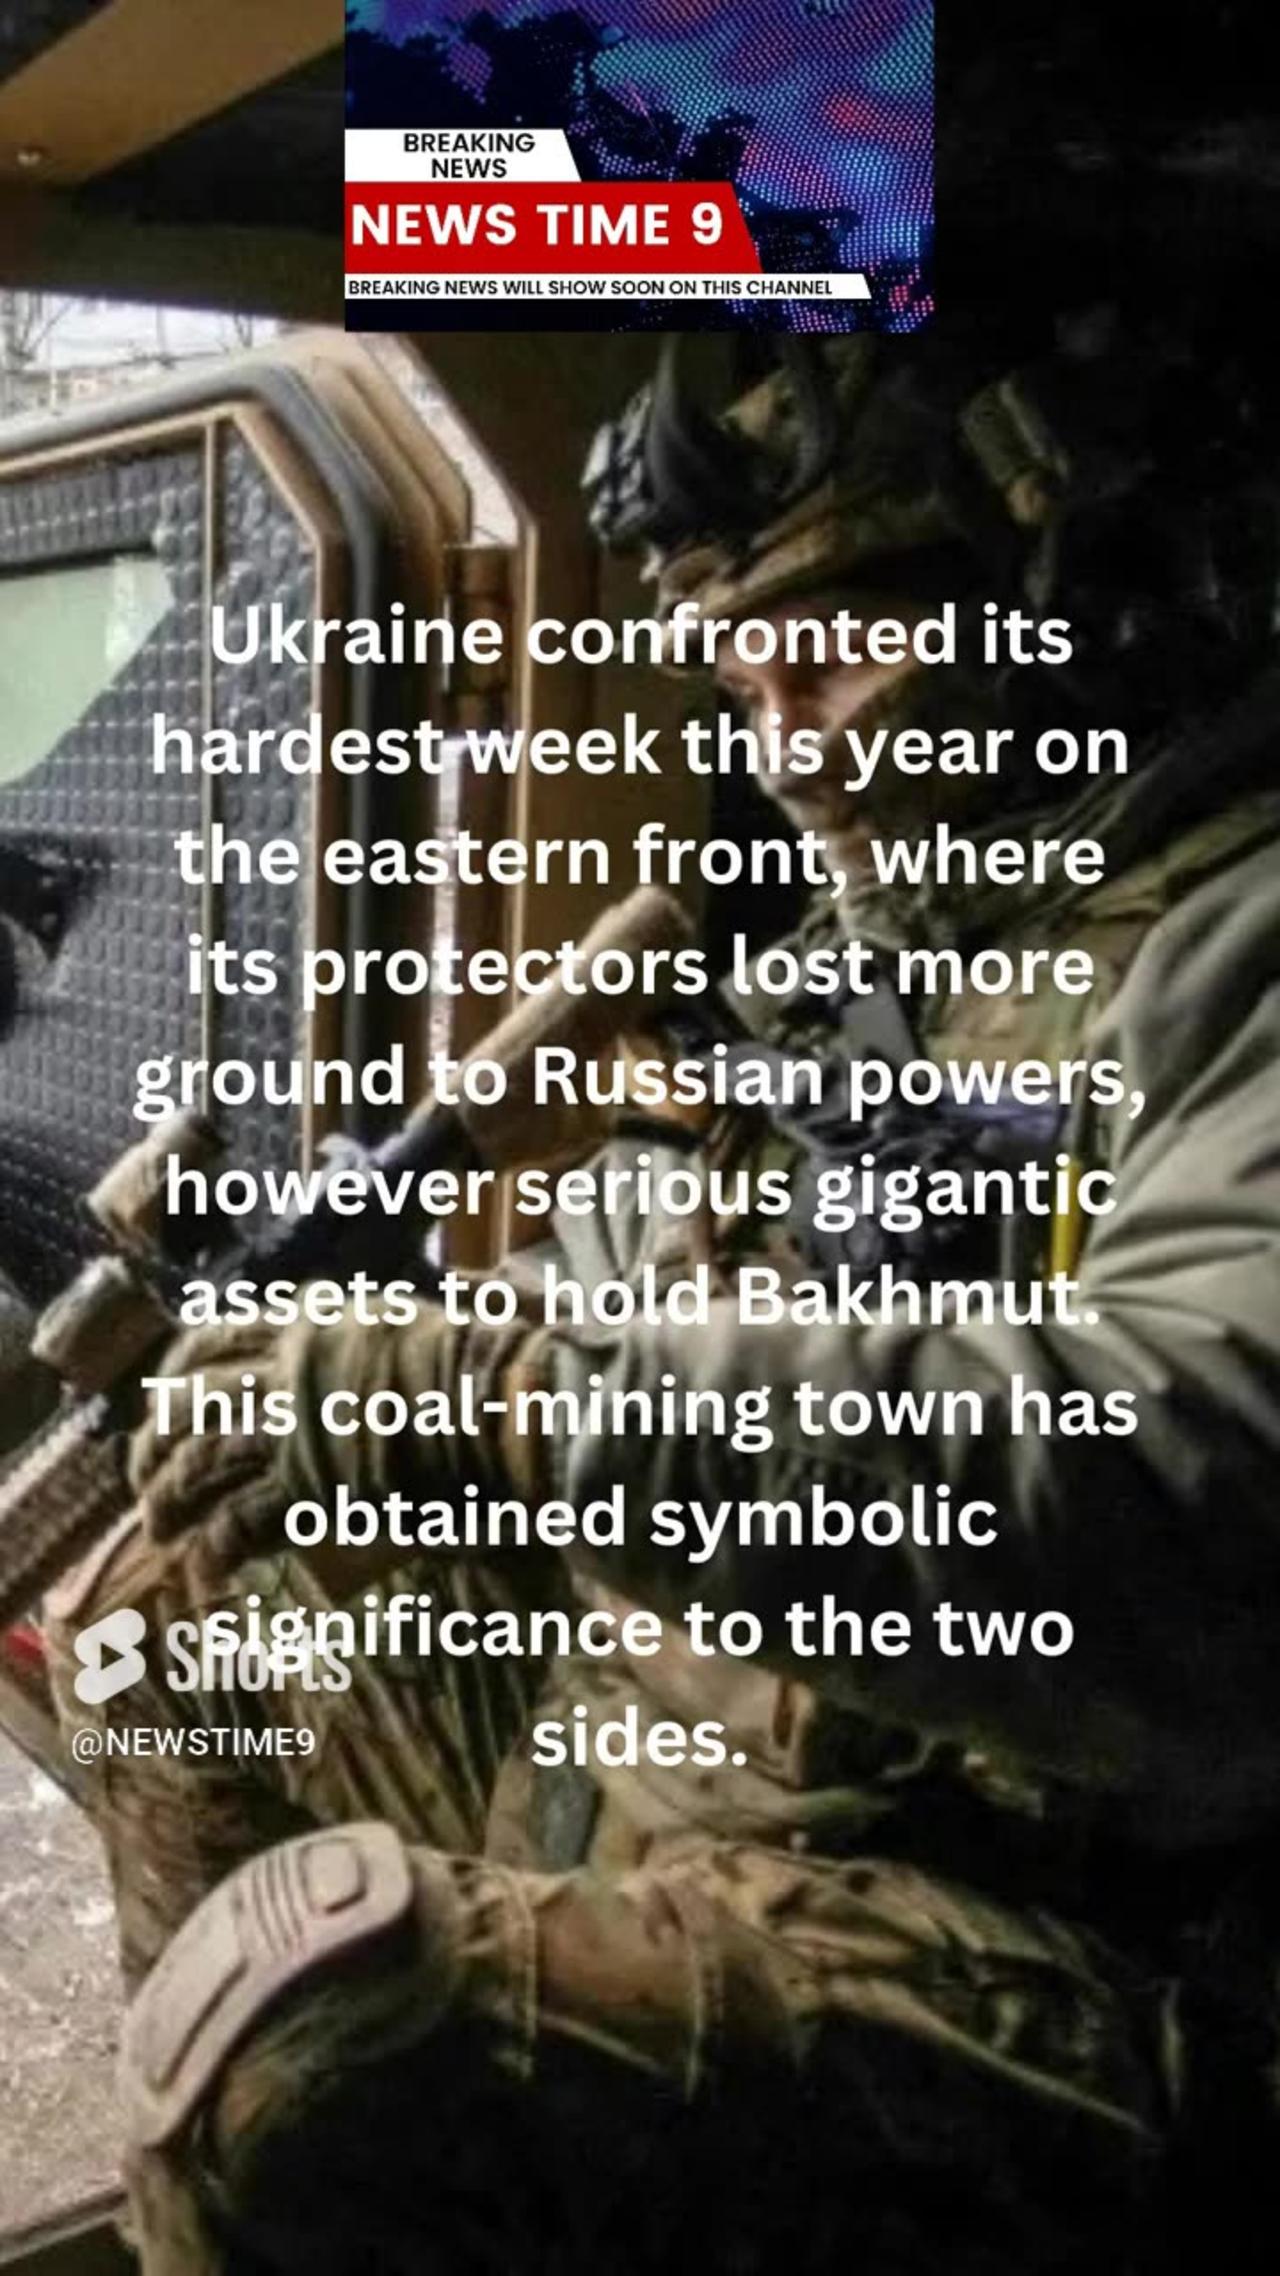 Russia encompasses Bakhmut as Ukraine sends in troops@NEWSTIME9